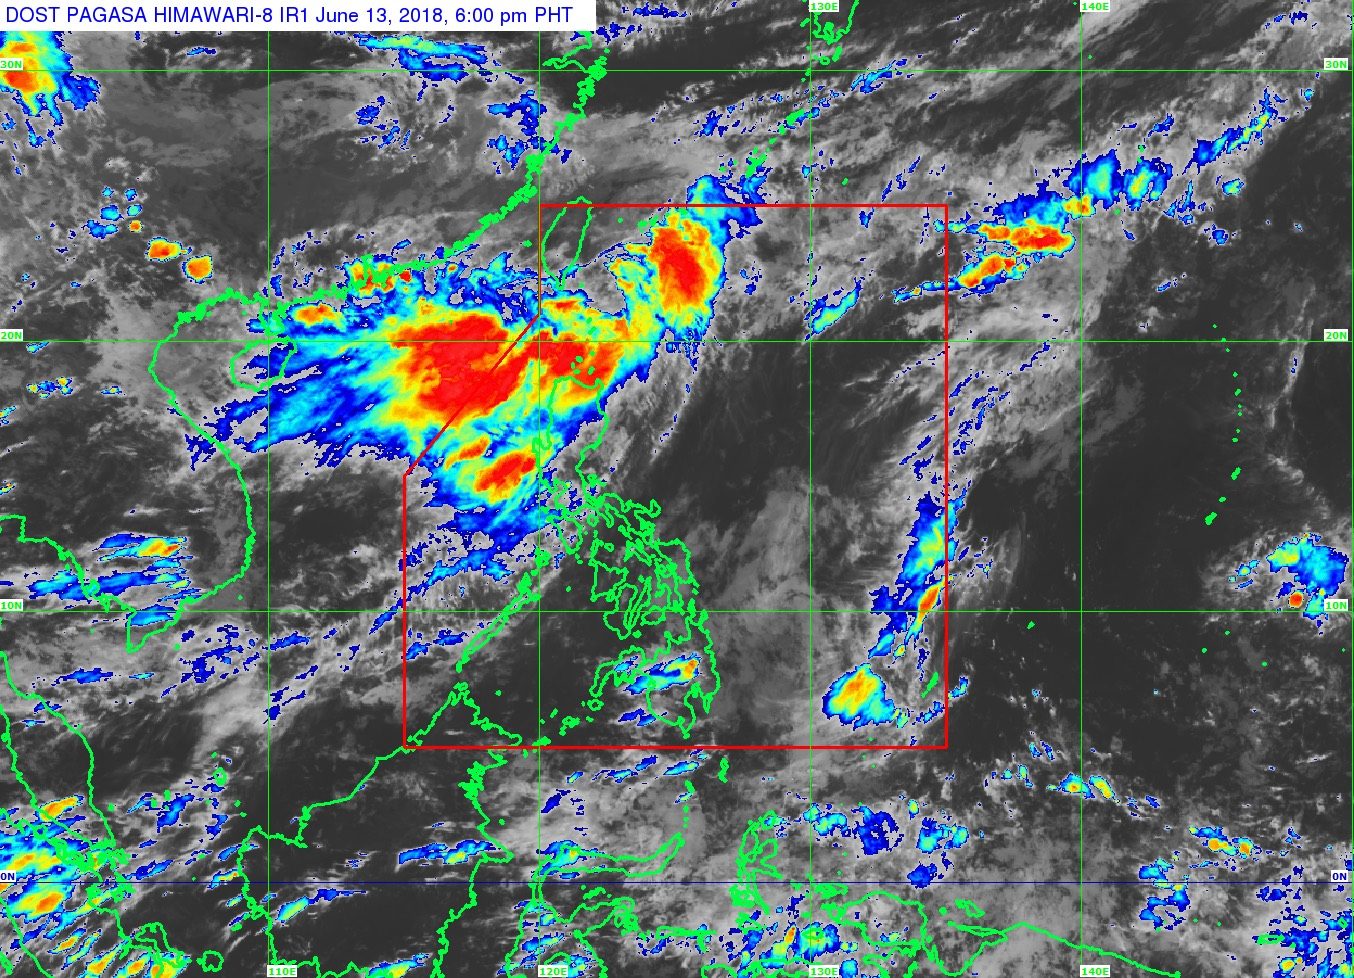 More rain in Luzon on June 14 as LPA enhances monsoon